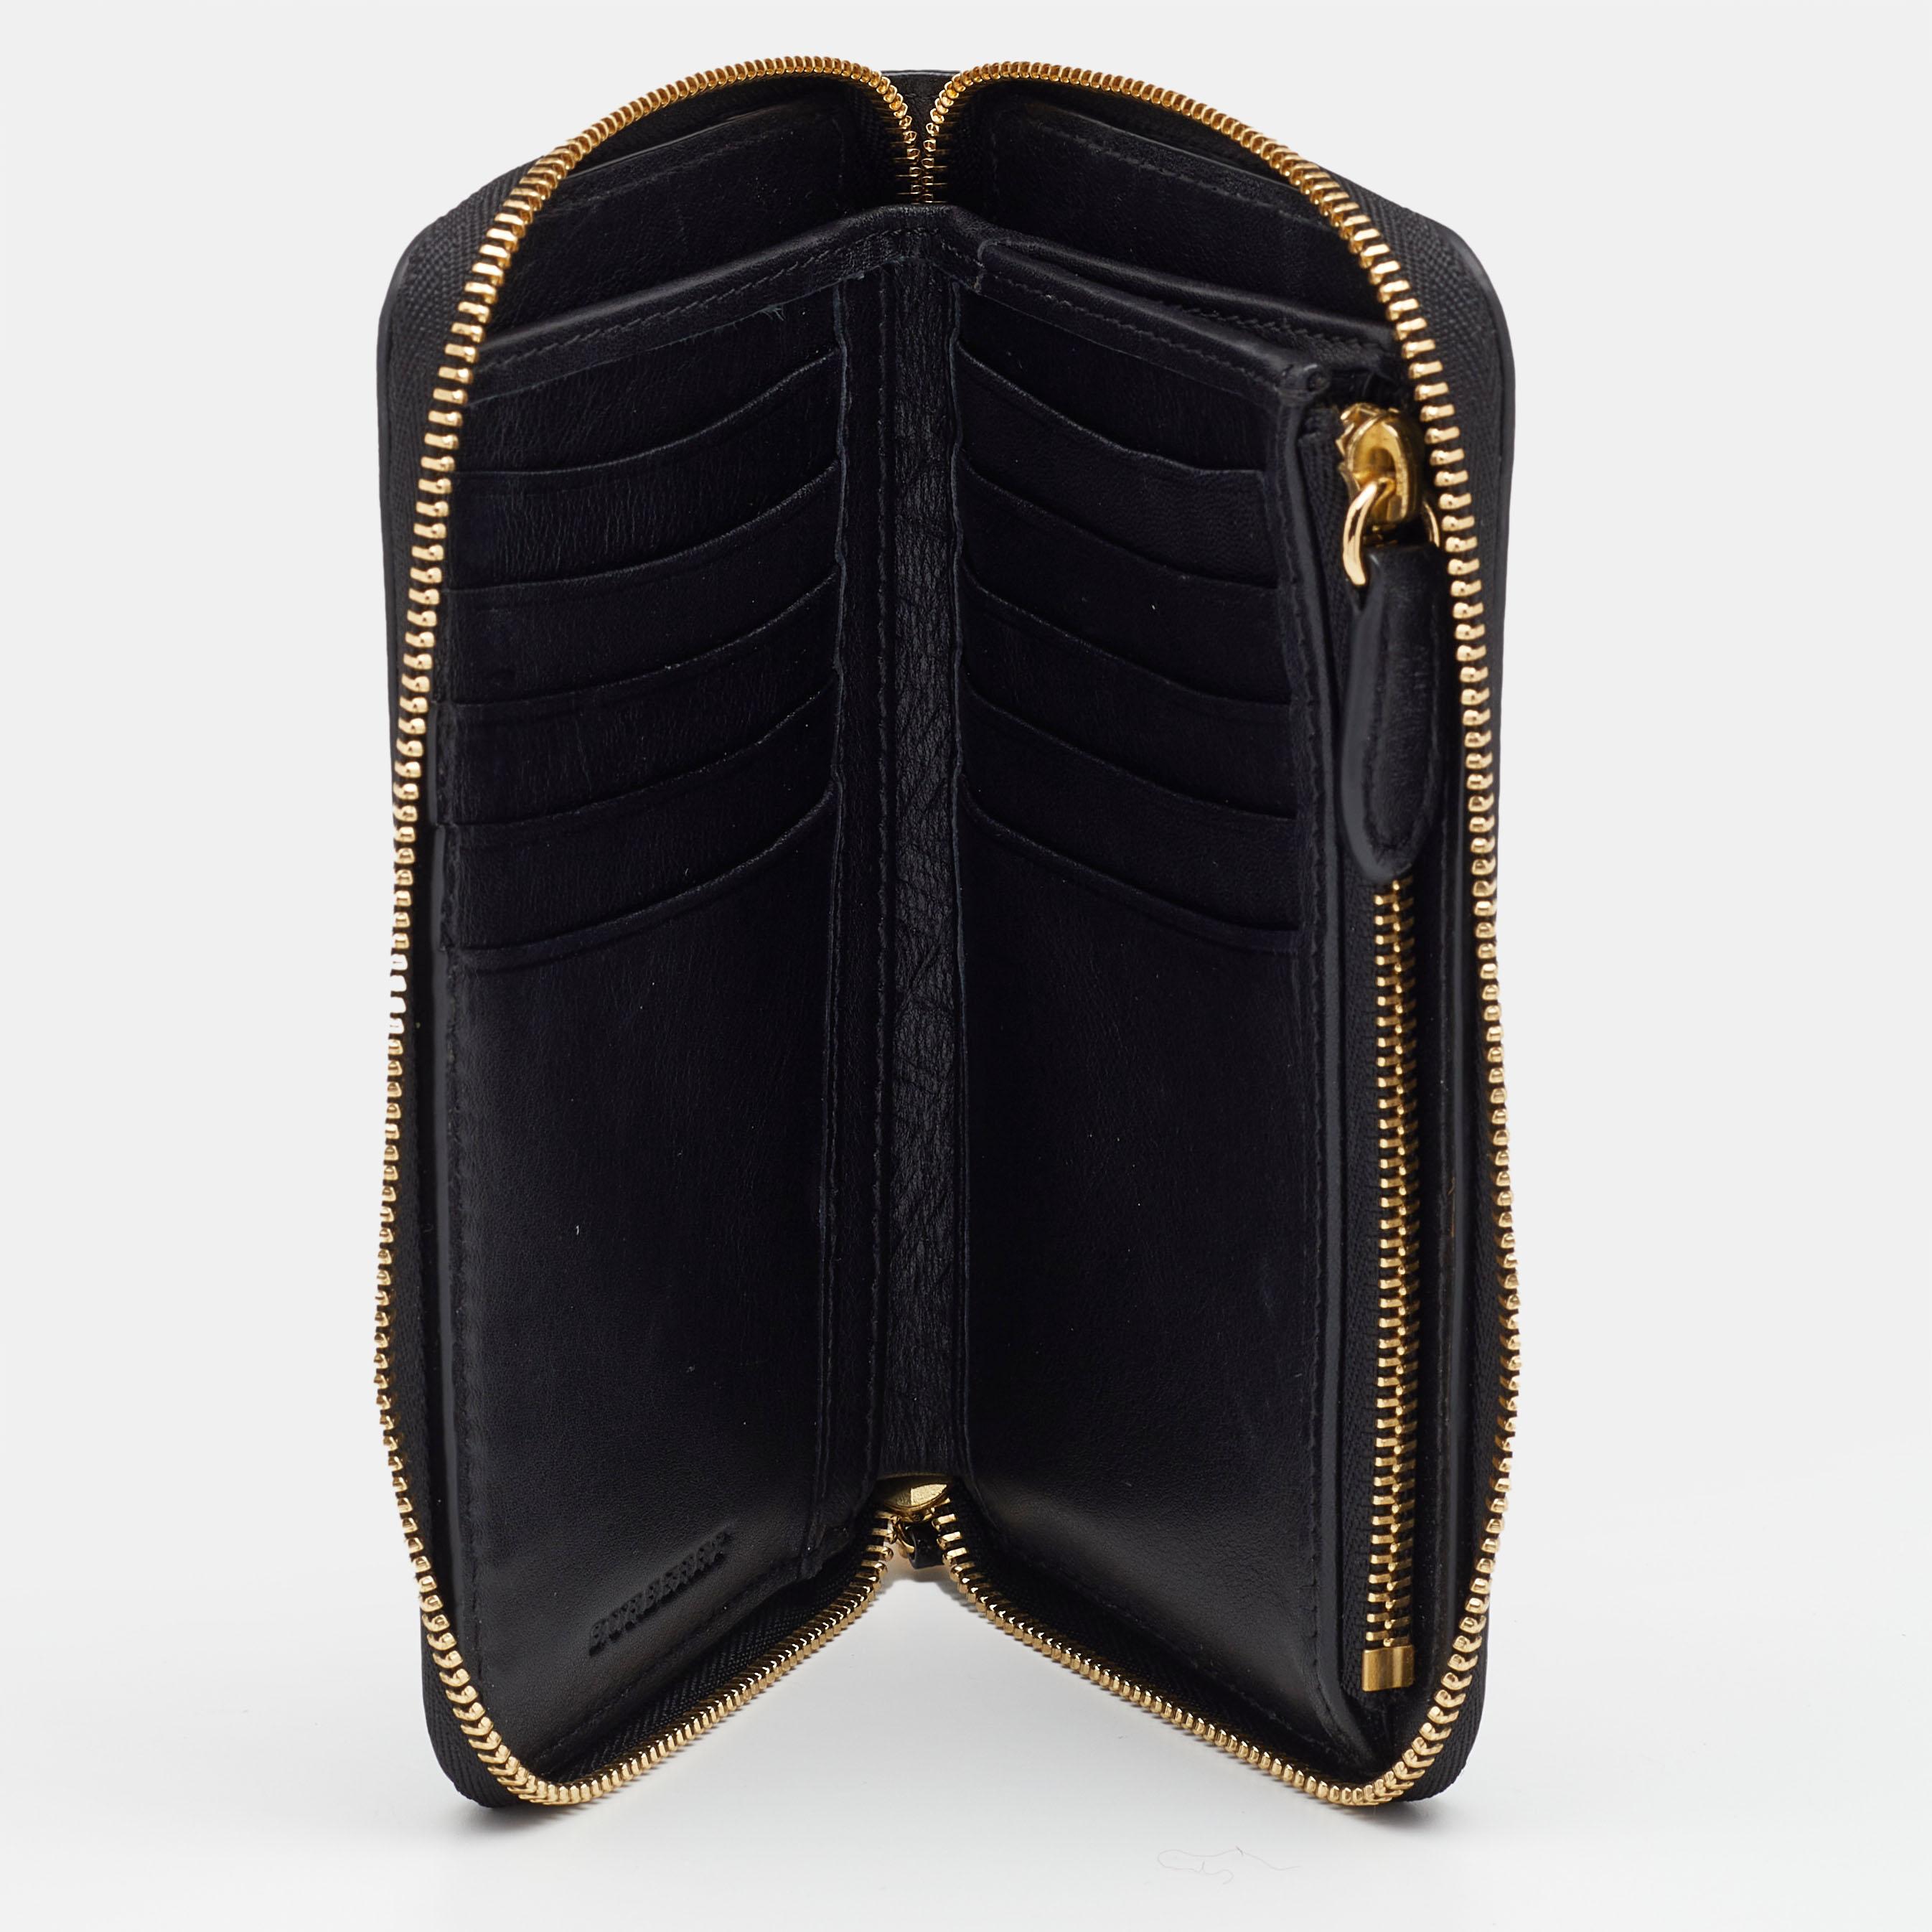 Burberry Black Patent Leather Elmore London Zip Around Wallet 5